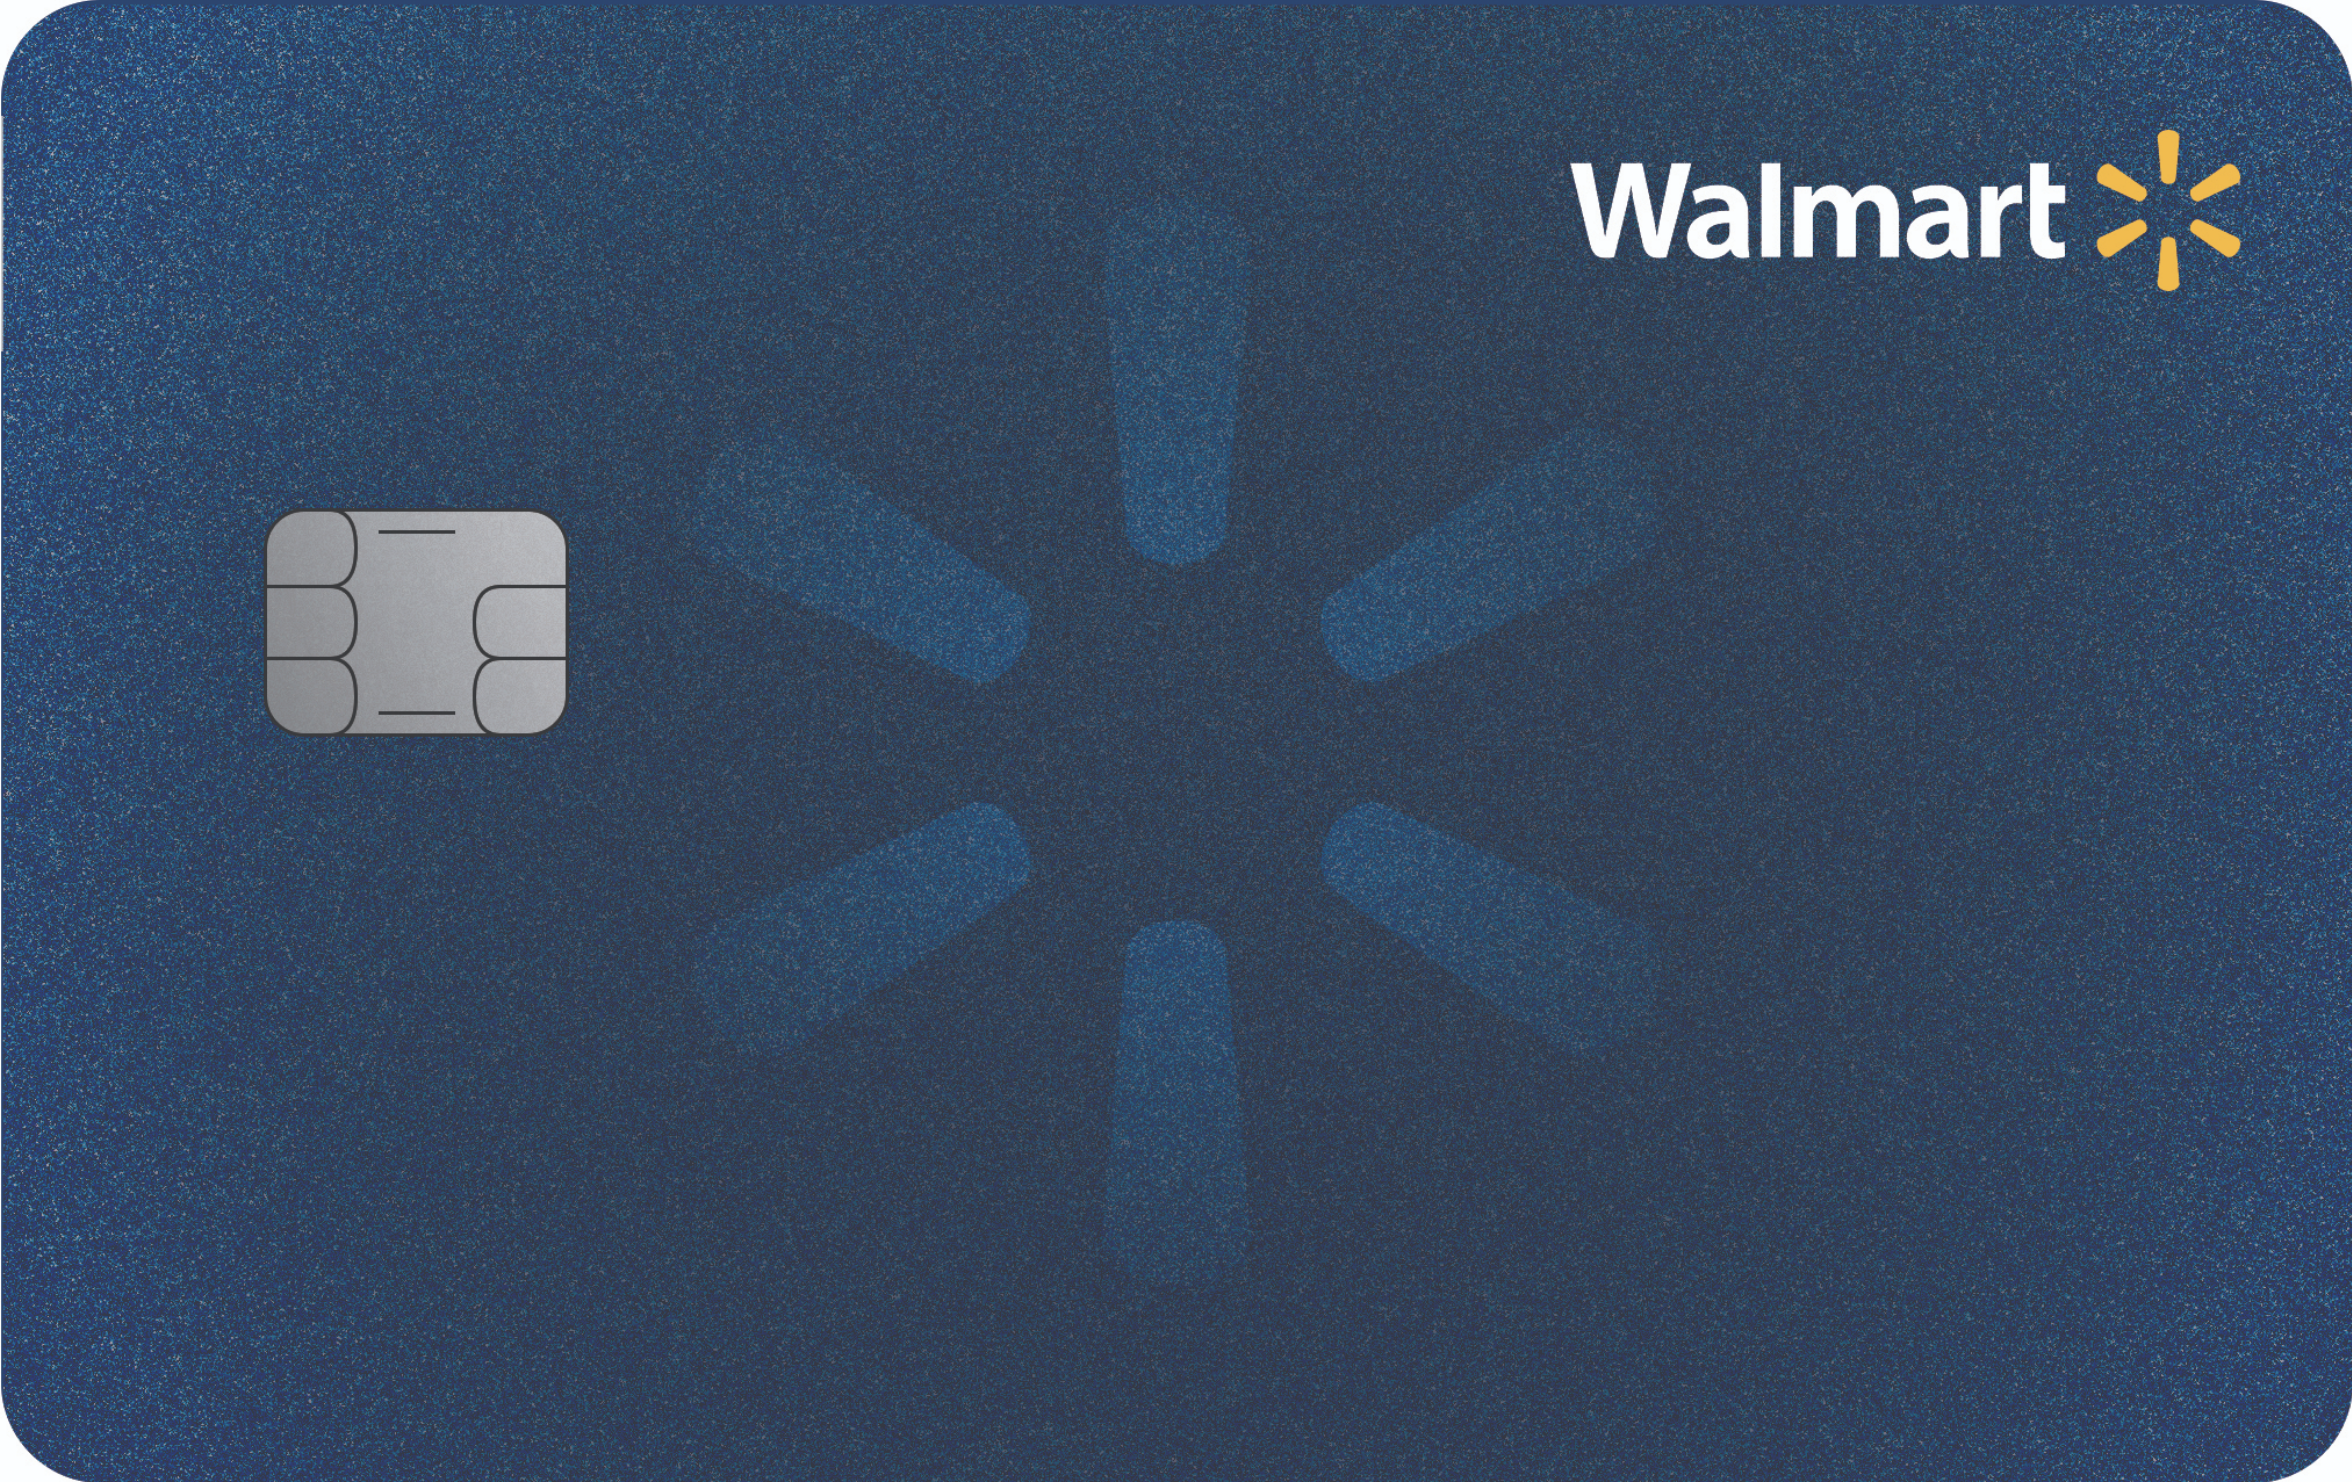 Capital One Walmart Rewards Credit Card